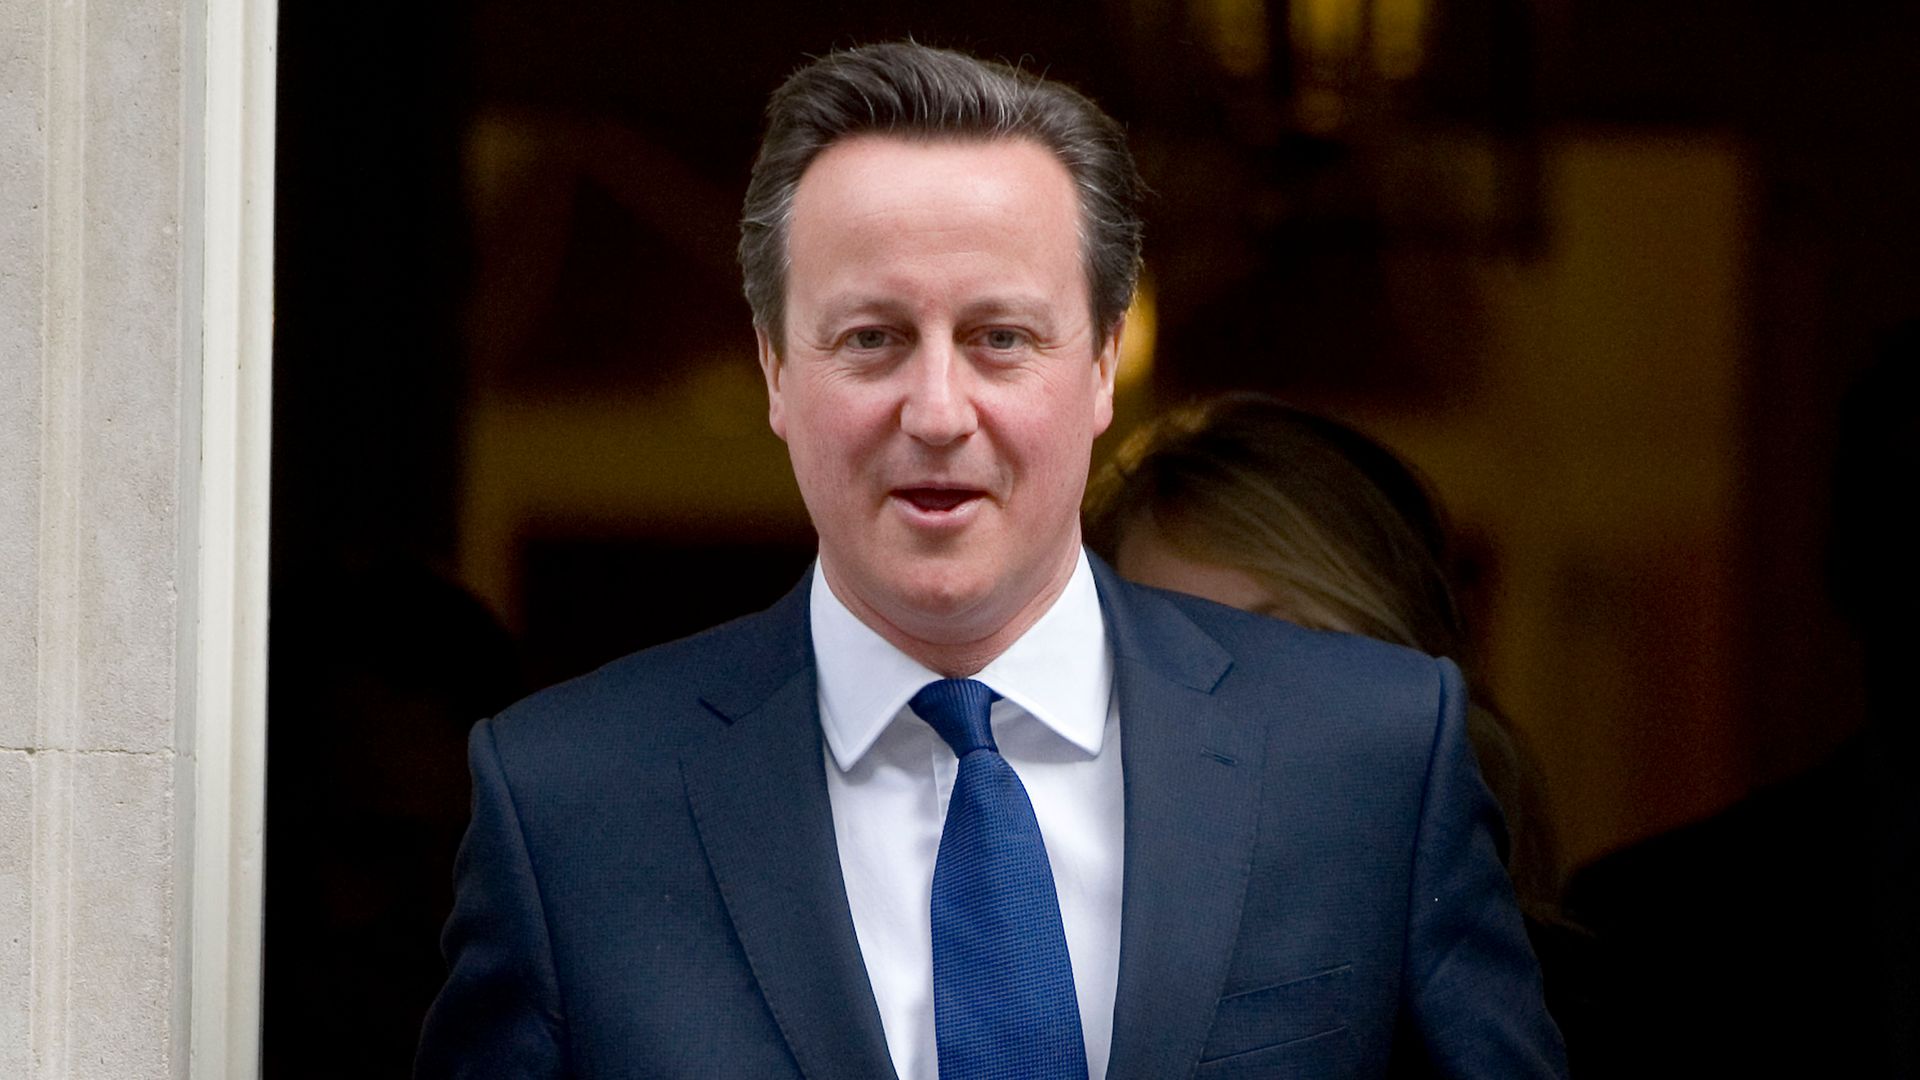 David Cameron leaves 10 Downing Street - Credit: PA